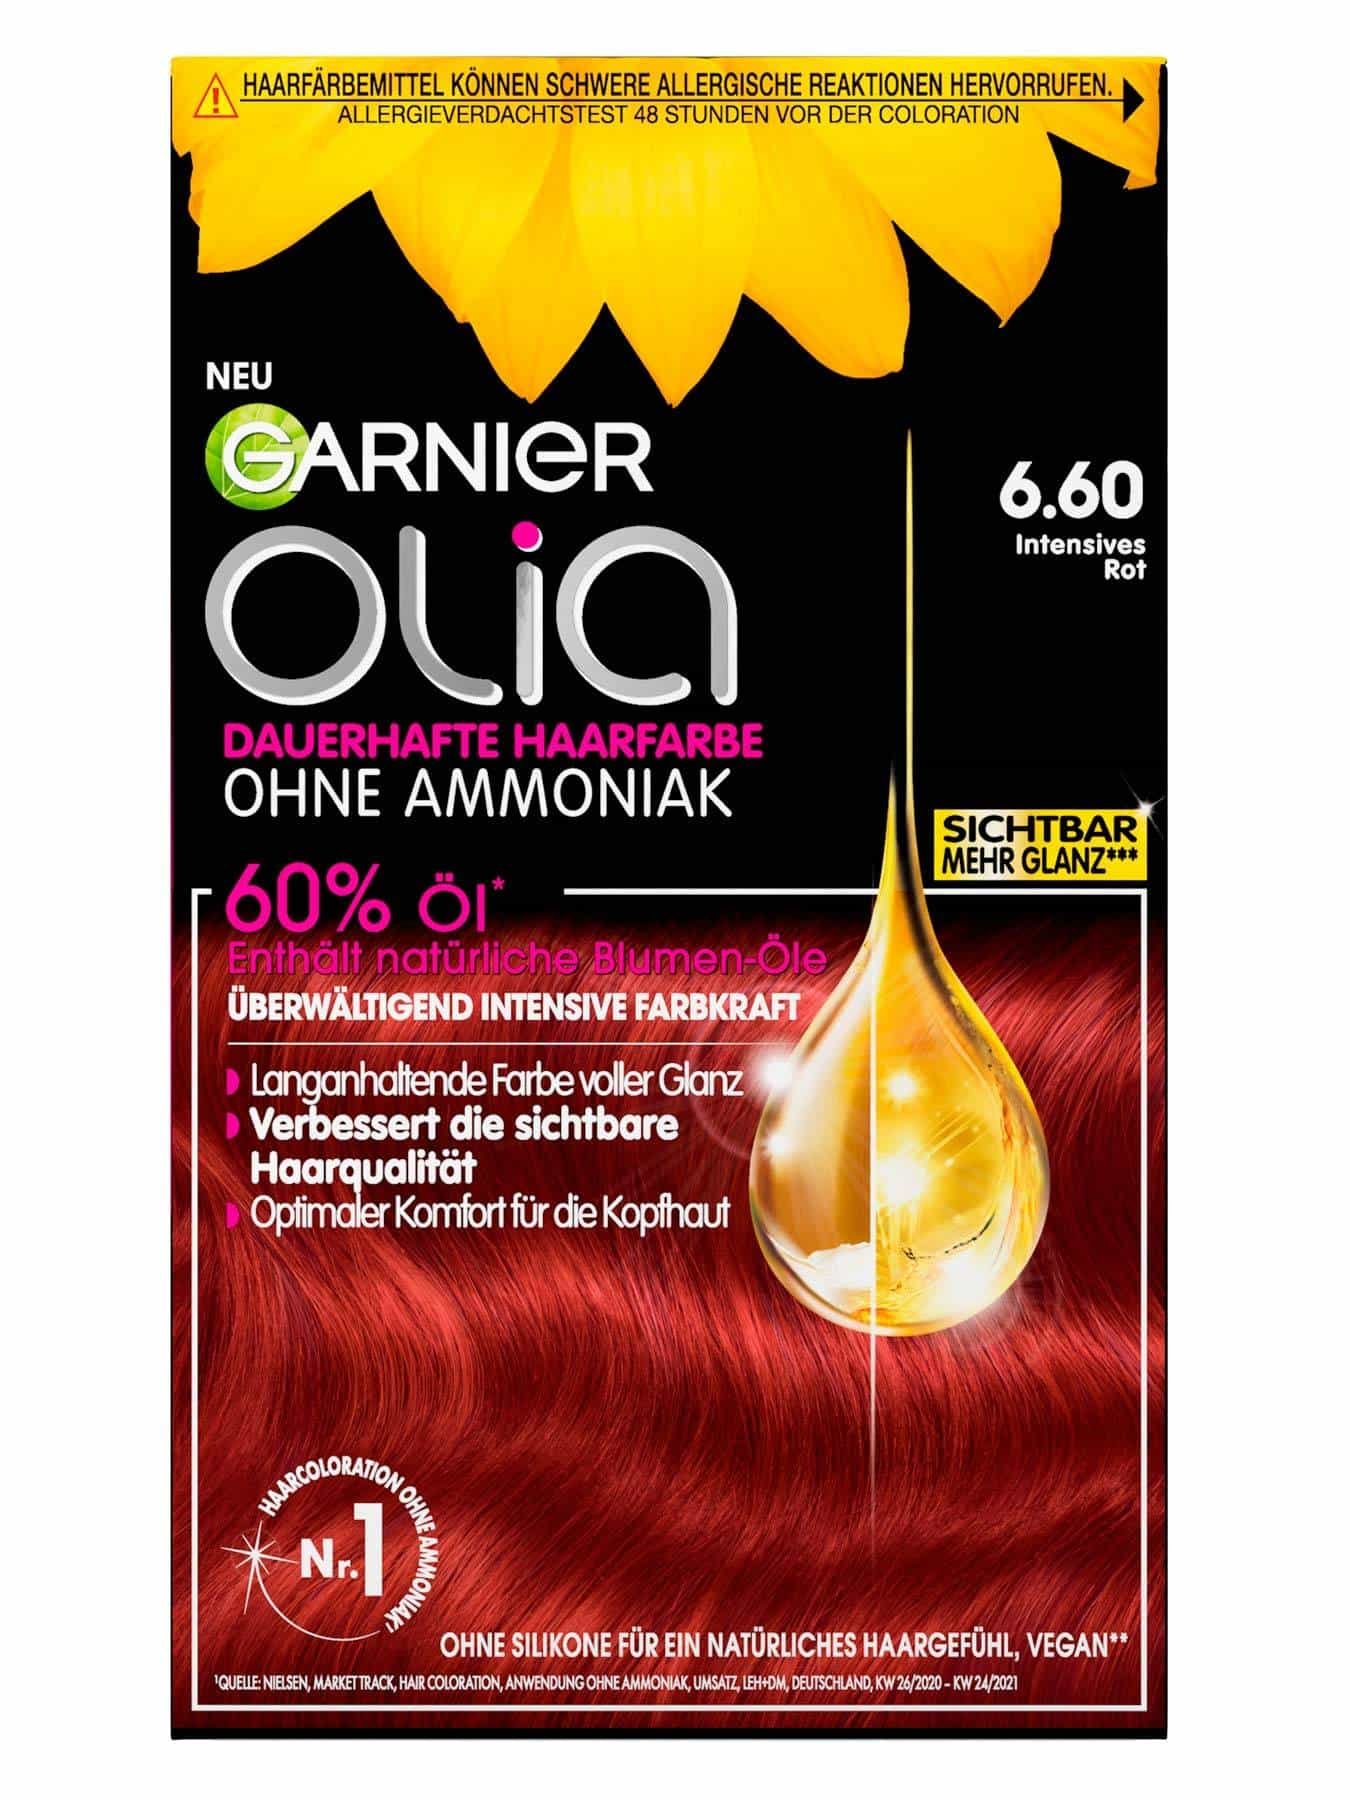 Nr. 6.60 Intensives Rot – dauerhafte | Haarfarbe Garnier